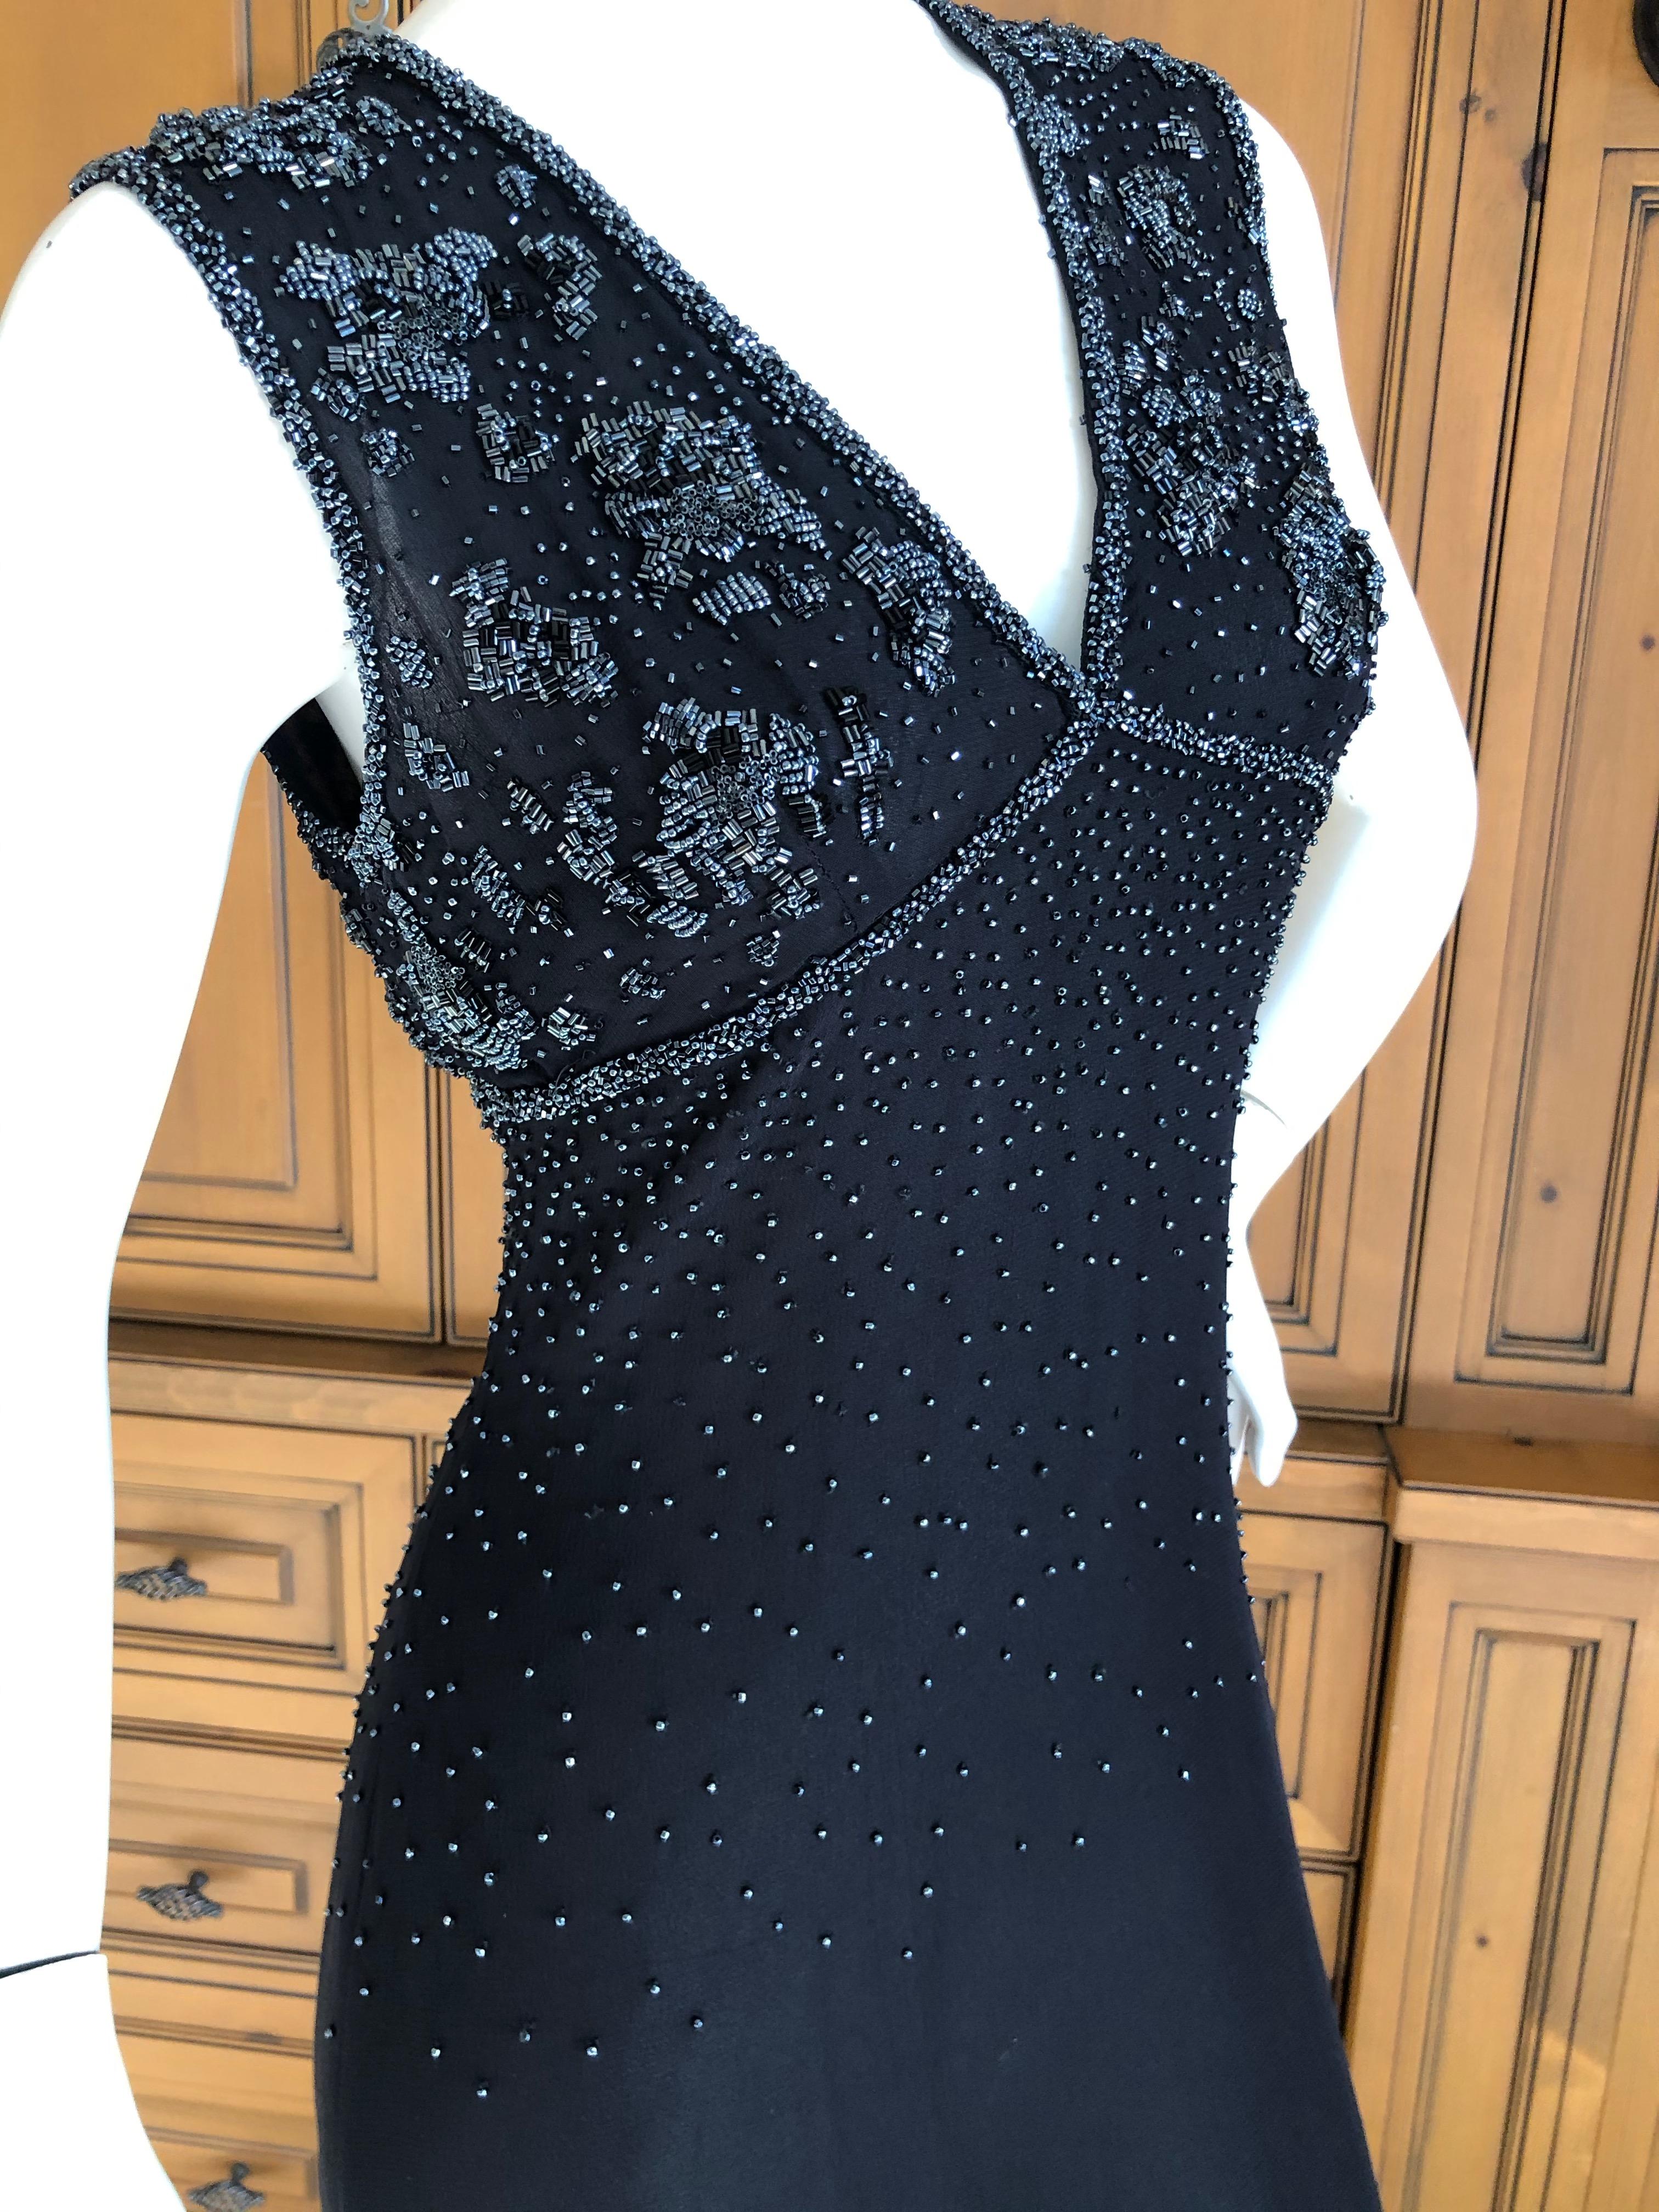 Emanuel Ungaro Parallel Vintage Black Evening Dress w Hematite Seed Bead Details
So pretty .
Size 6
Bust 35